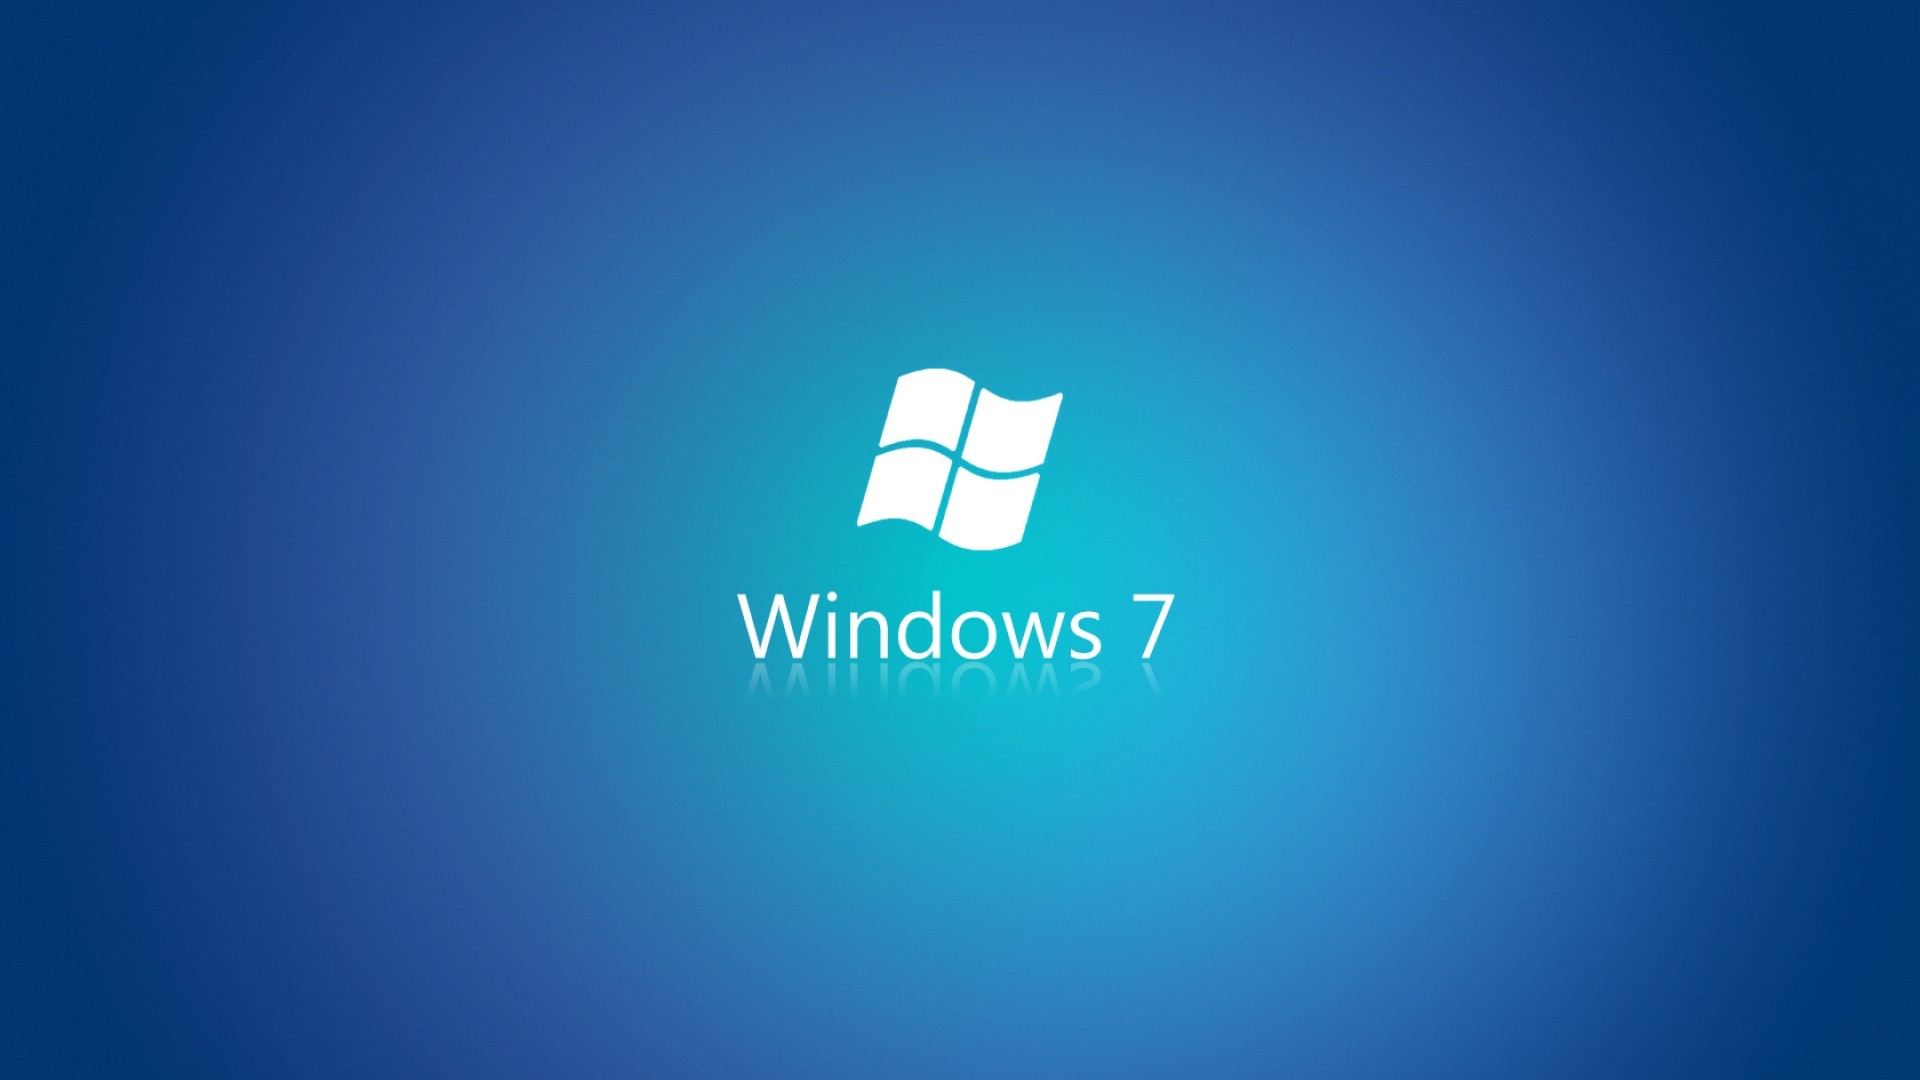 Windows 7 logo wallpaper   HD Wallpapers